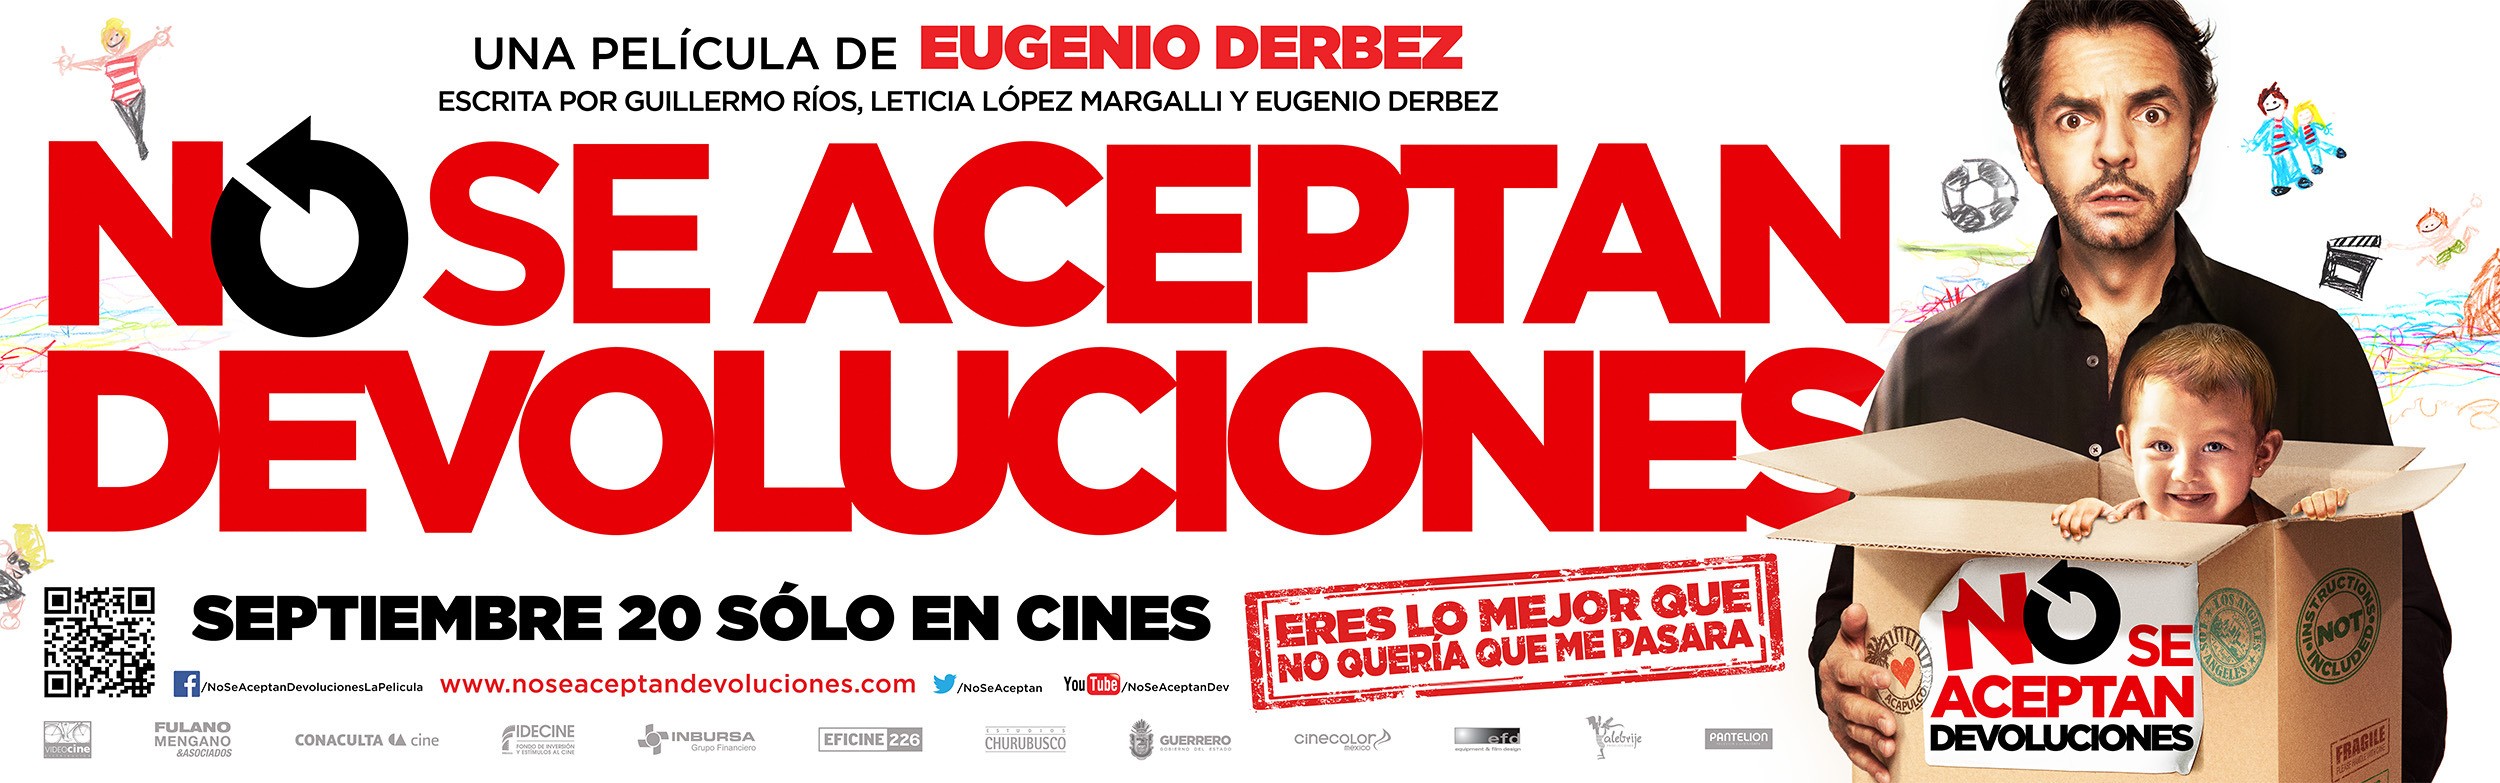 Mega Sized Movie Poster Image for No se Aceptan Devoluciones (#6 of 10)